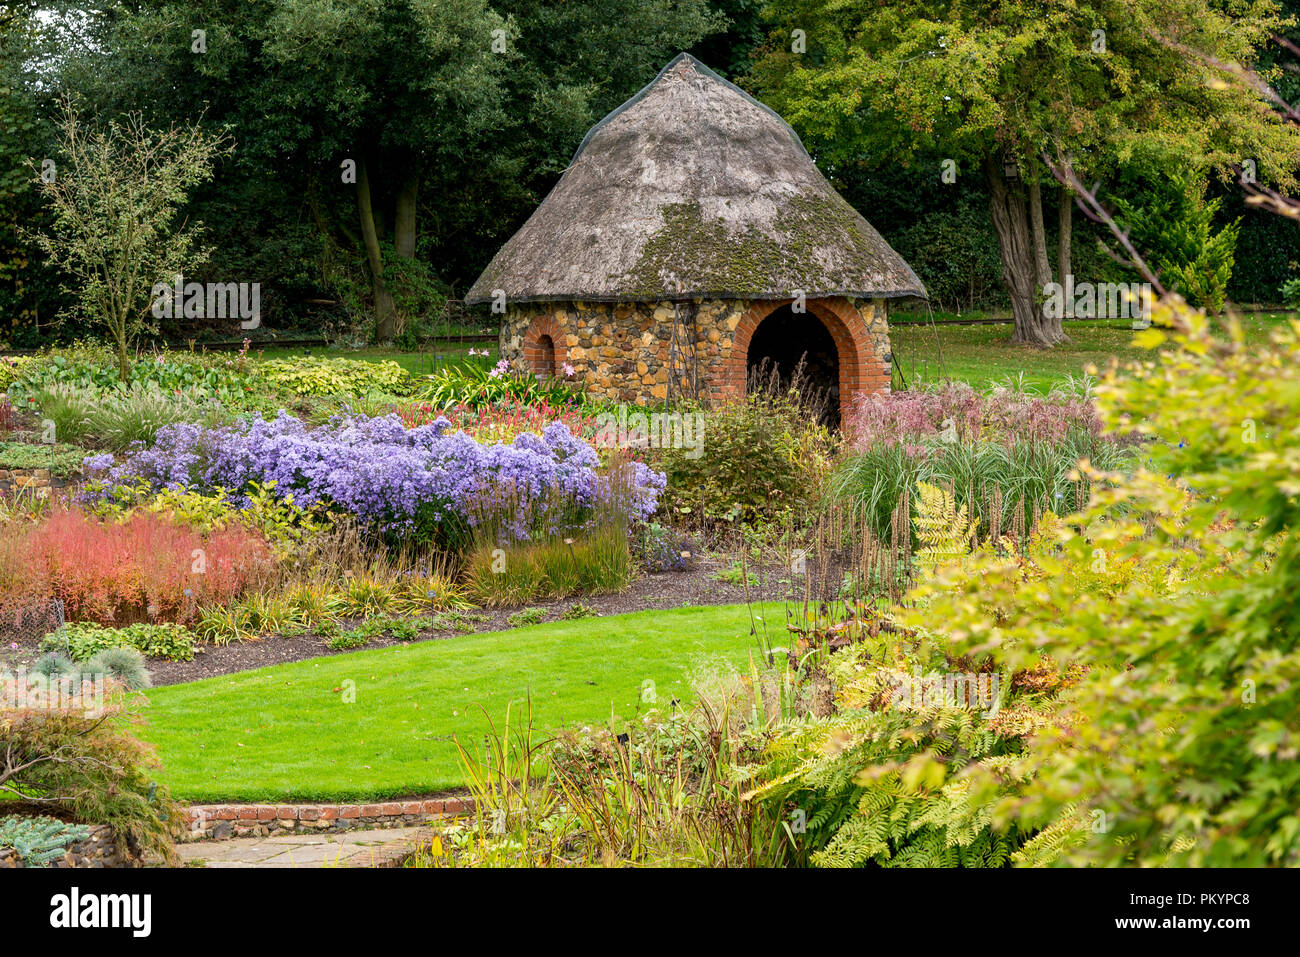 Bressingham Gardens - west of Diss in Norfolk, England - United Kingdom - Photo taken  October 7 2017 Stock Photo